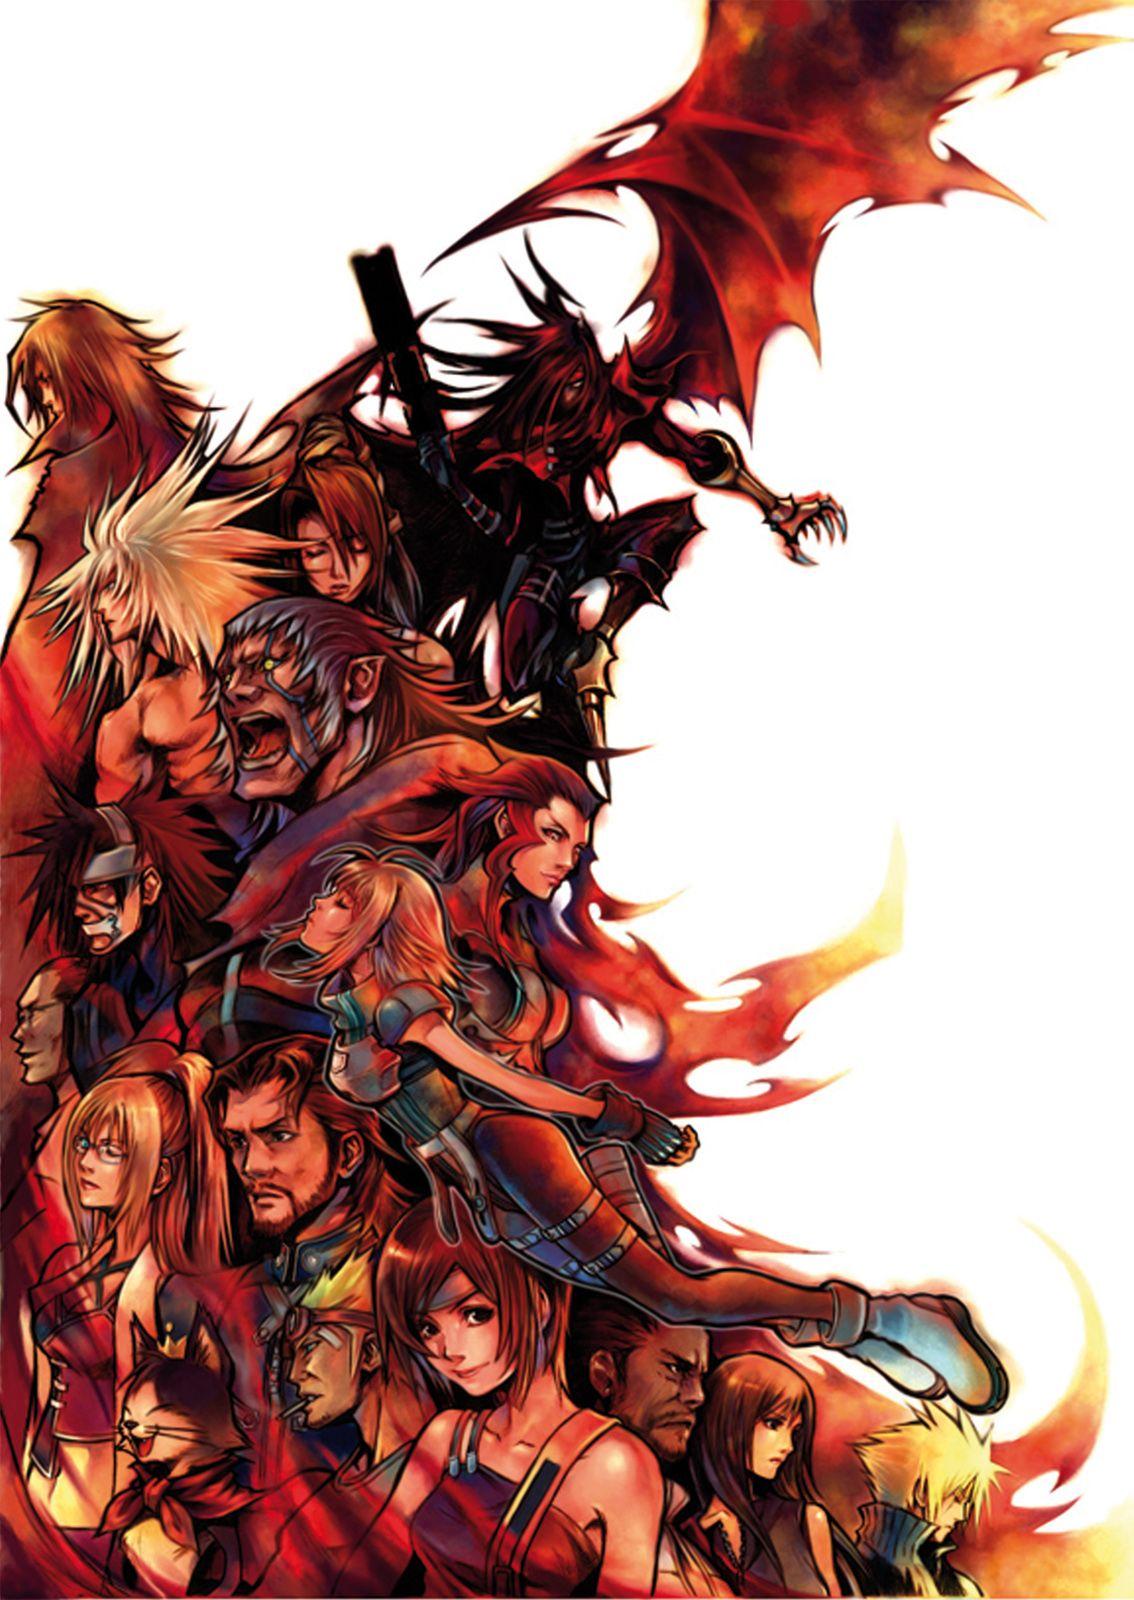 Most viewed Dirge Of Cerberus: Final Fantasy VII wallpaperK